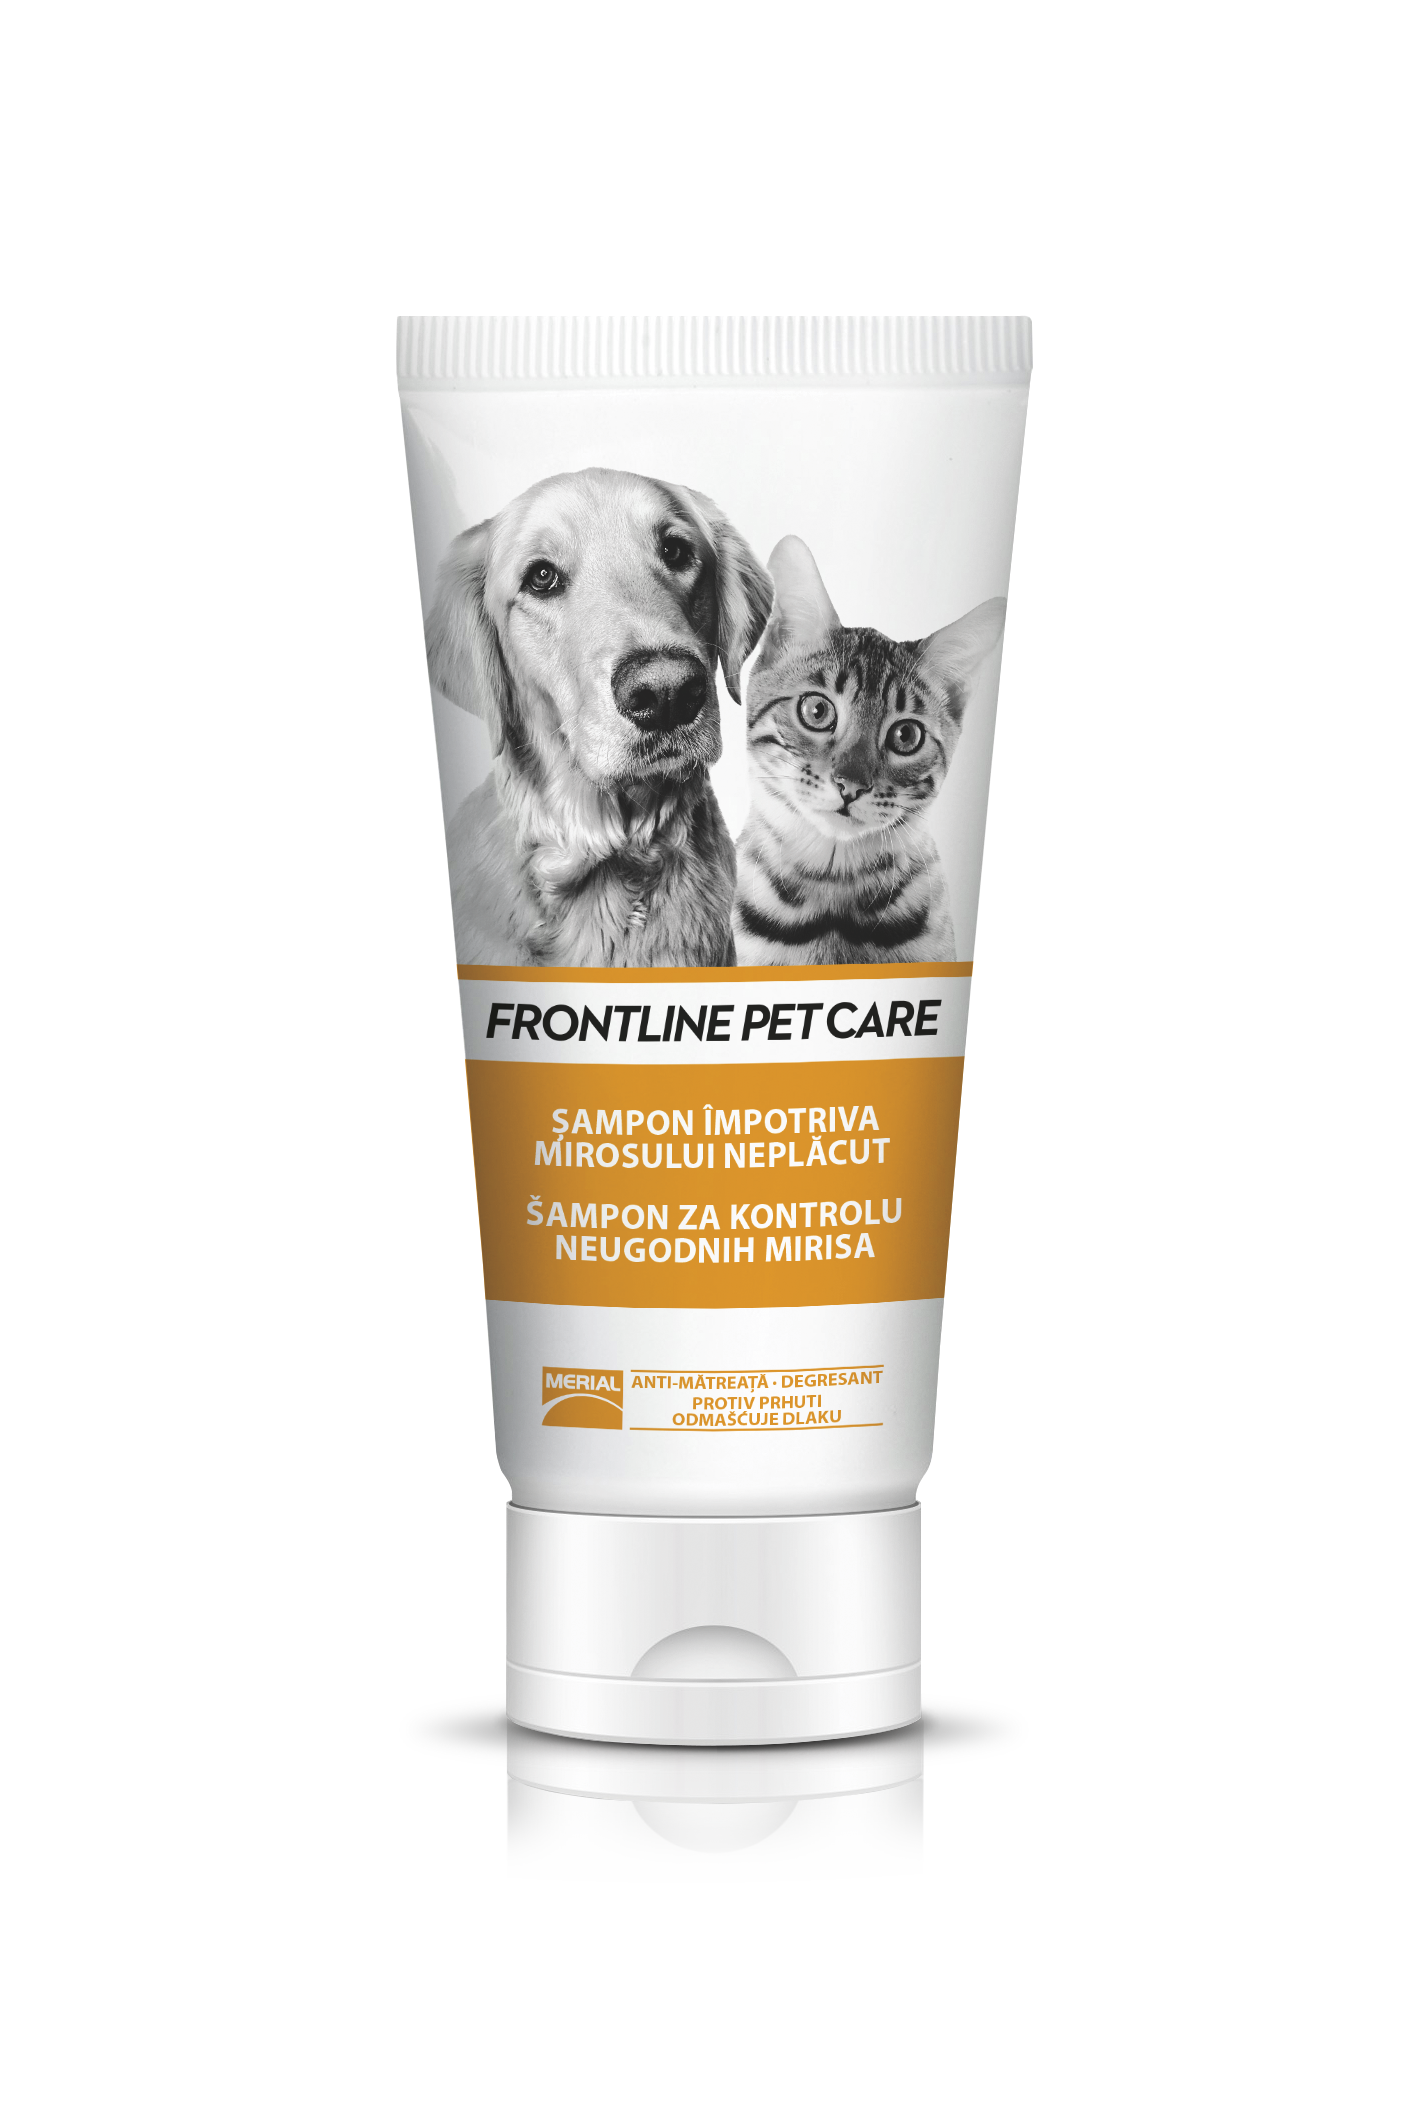 Frontline Pet Care Odor Control, 200 Ml